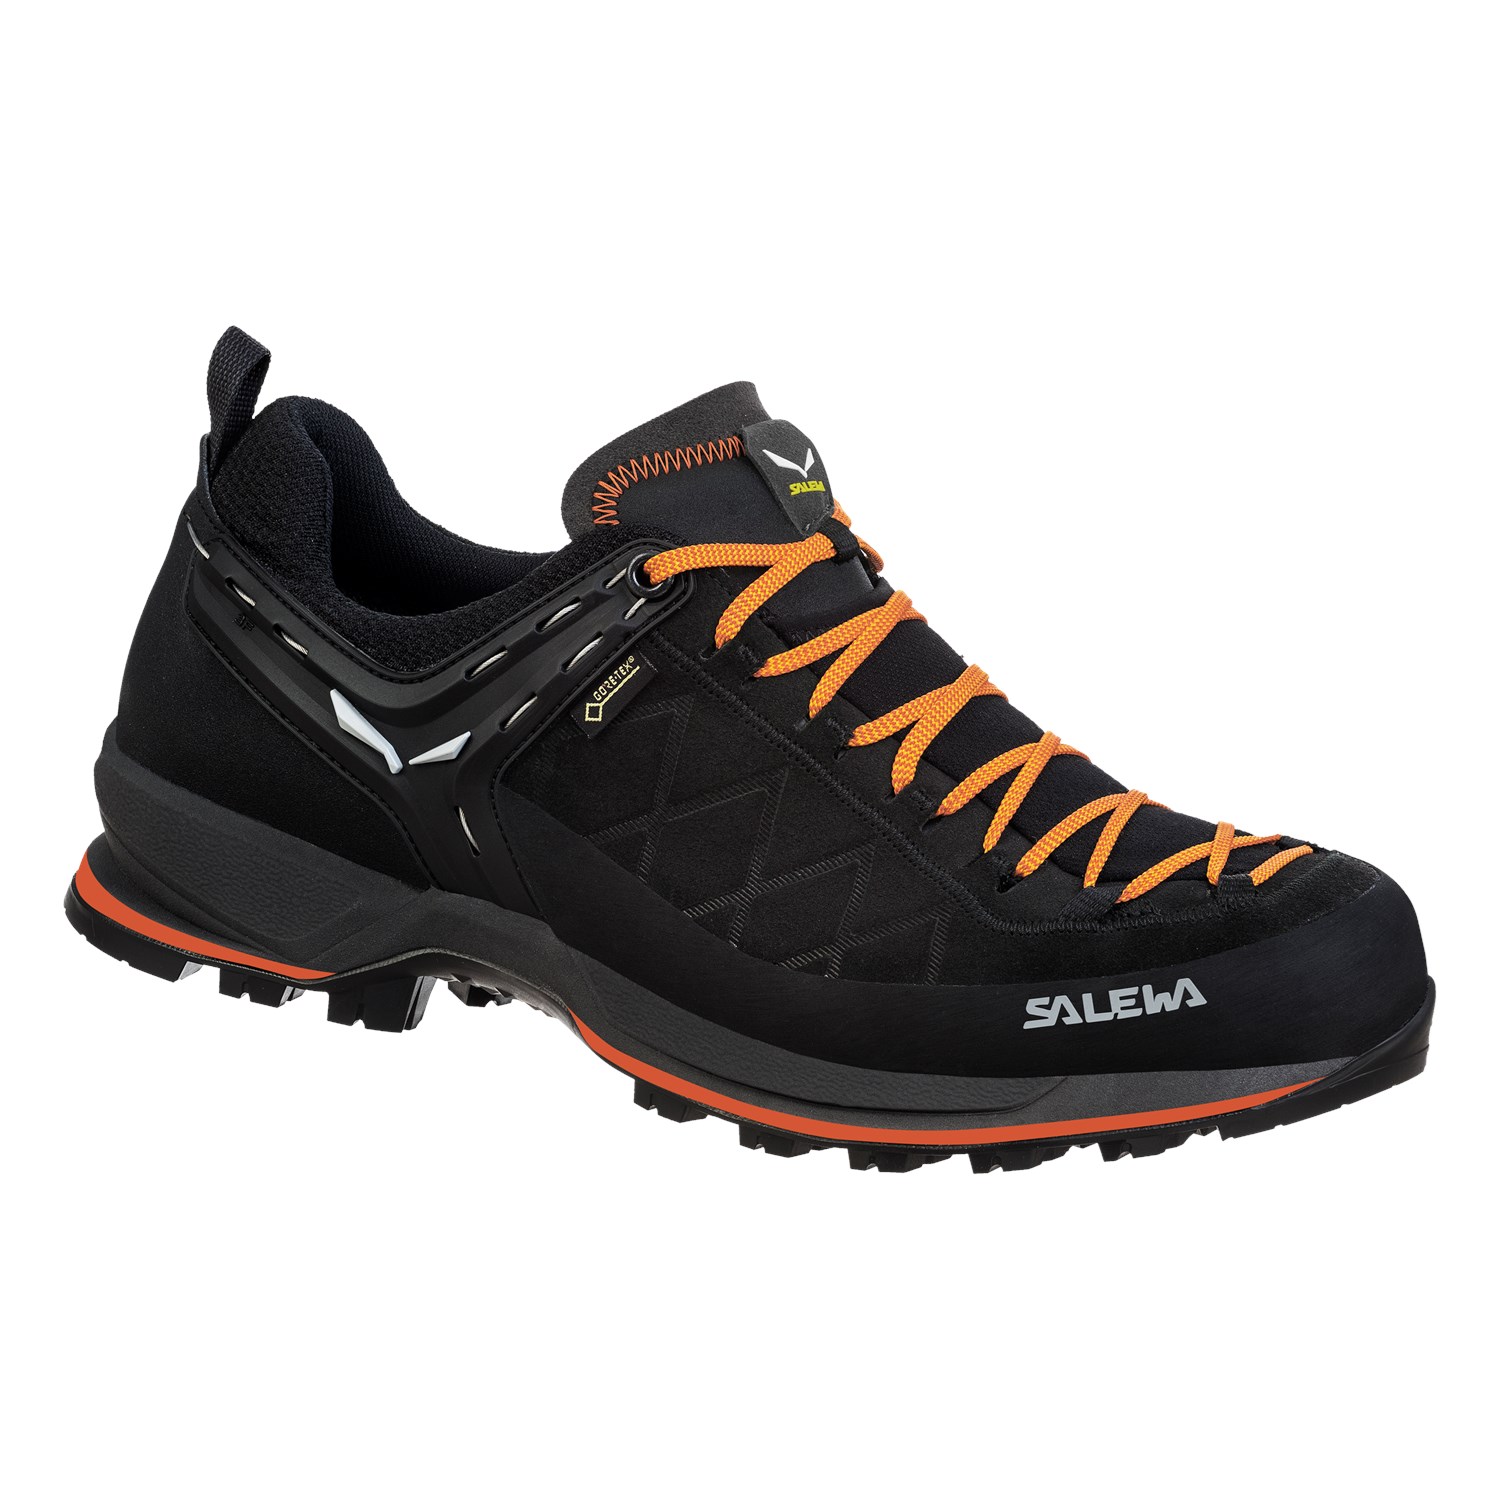 Mountain Trainer 2 GORE-TEX® Men's Shoes | Salewa® USA